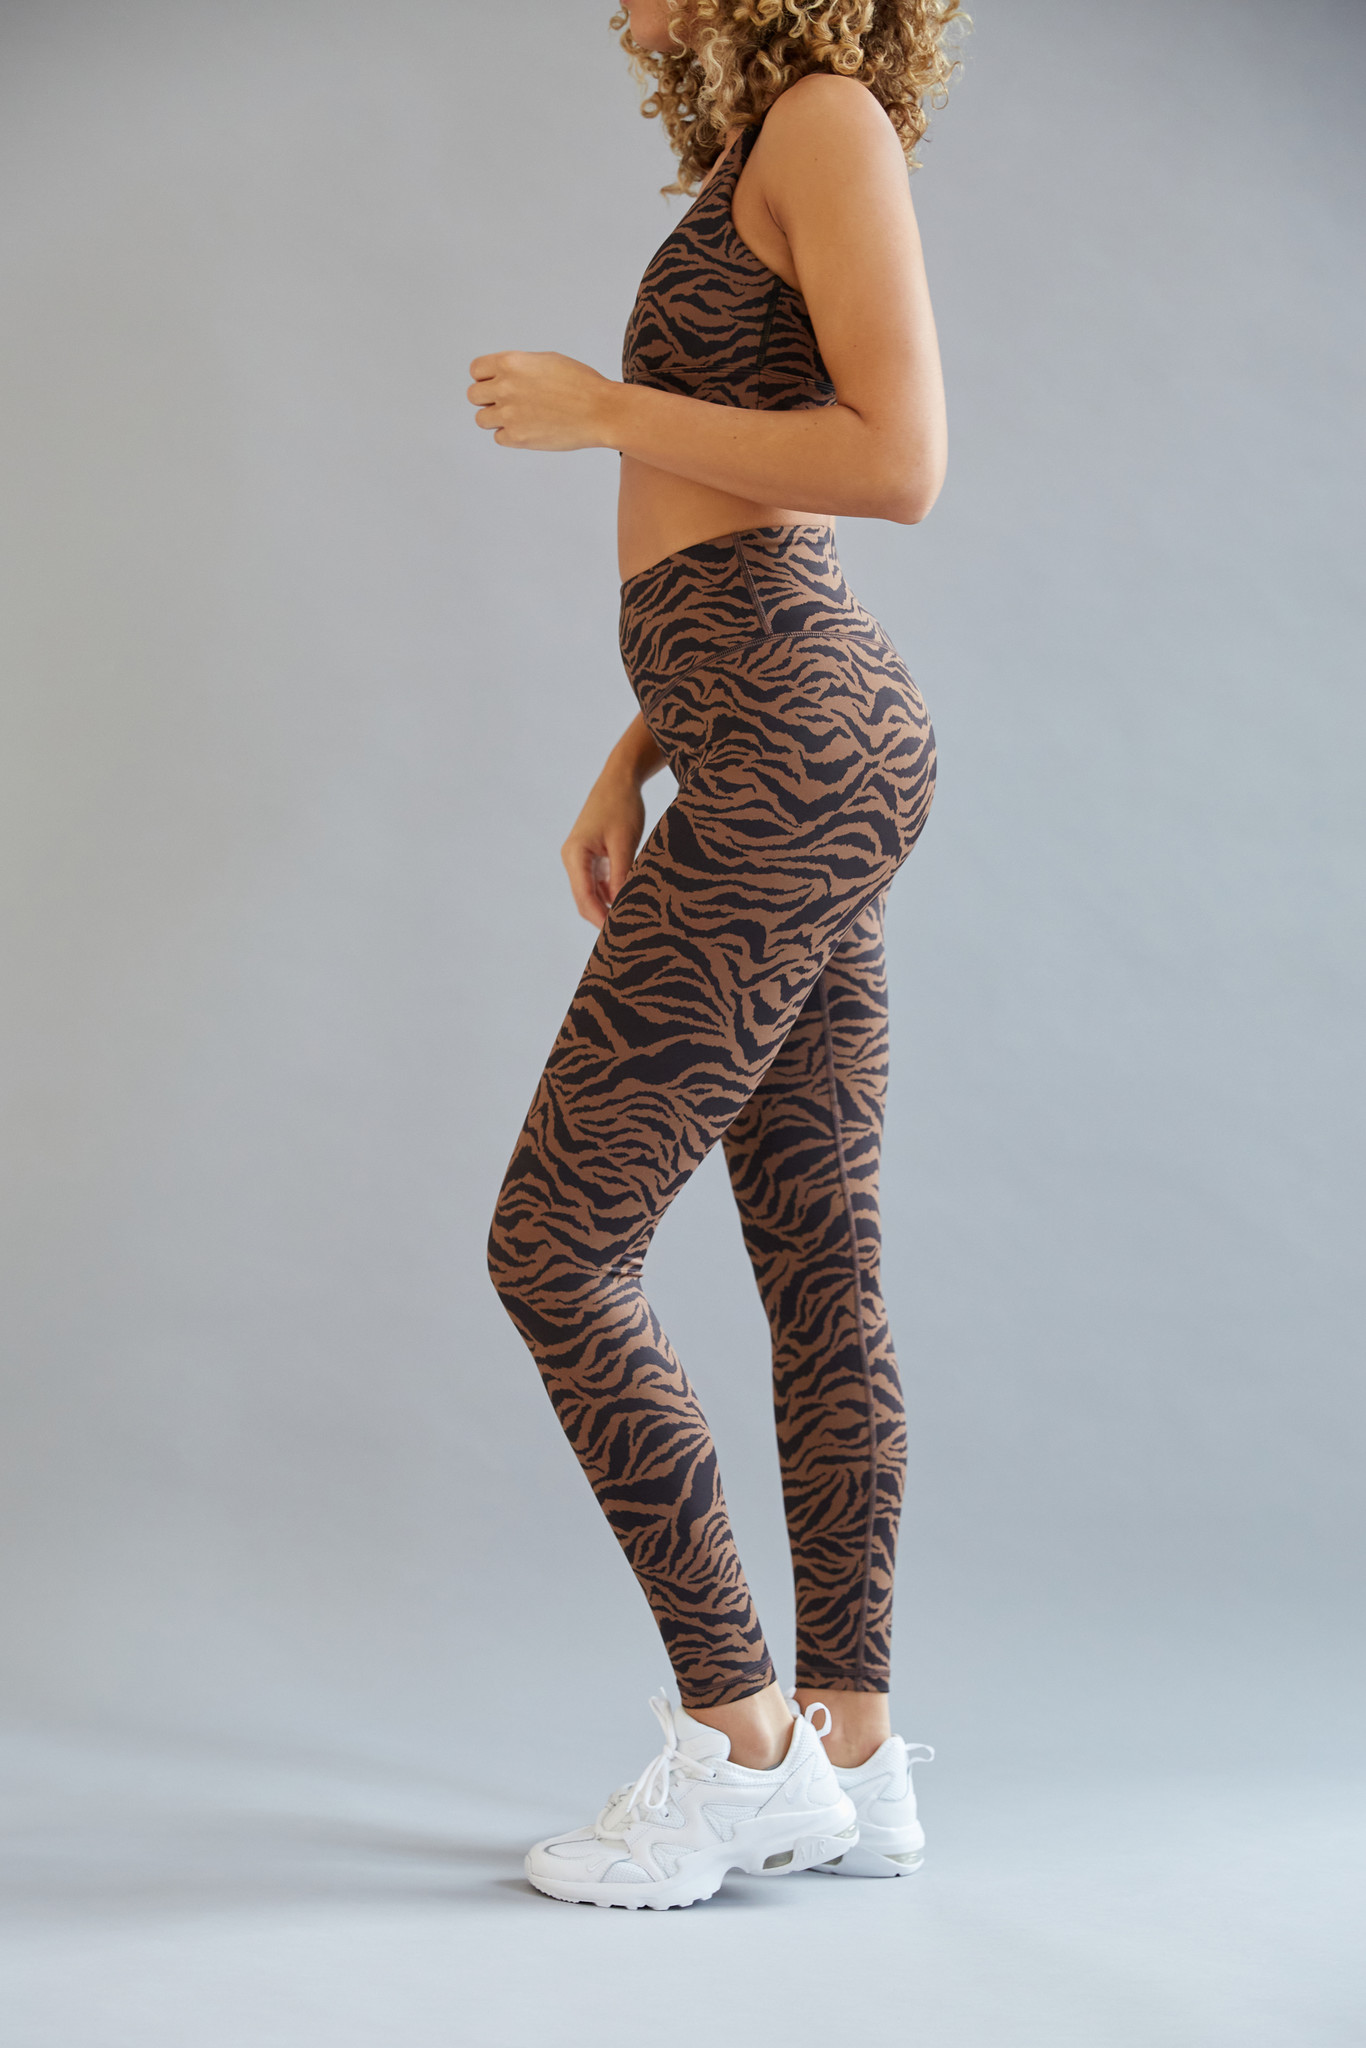 Varley Leggings Legging Century Clay Zebra Print Stretch Brown Dry Wick S  for sale online